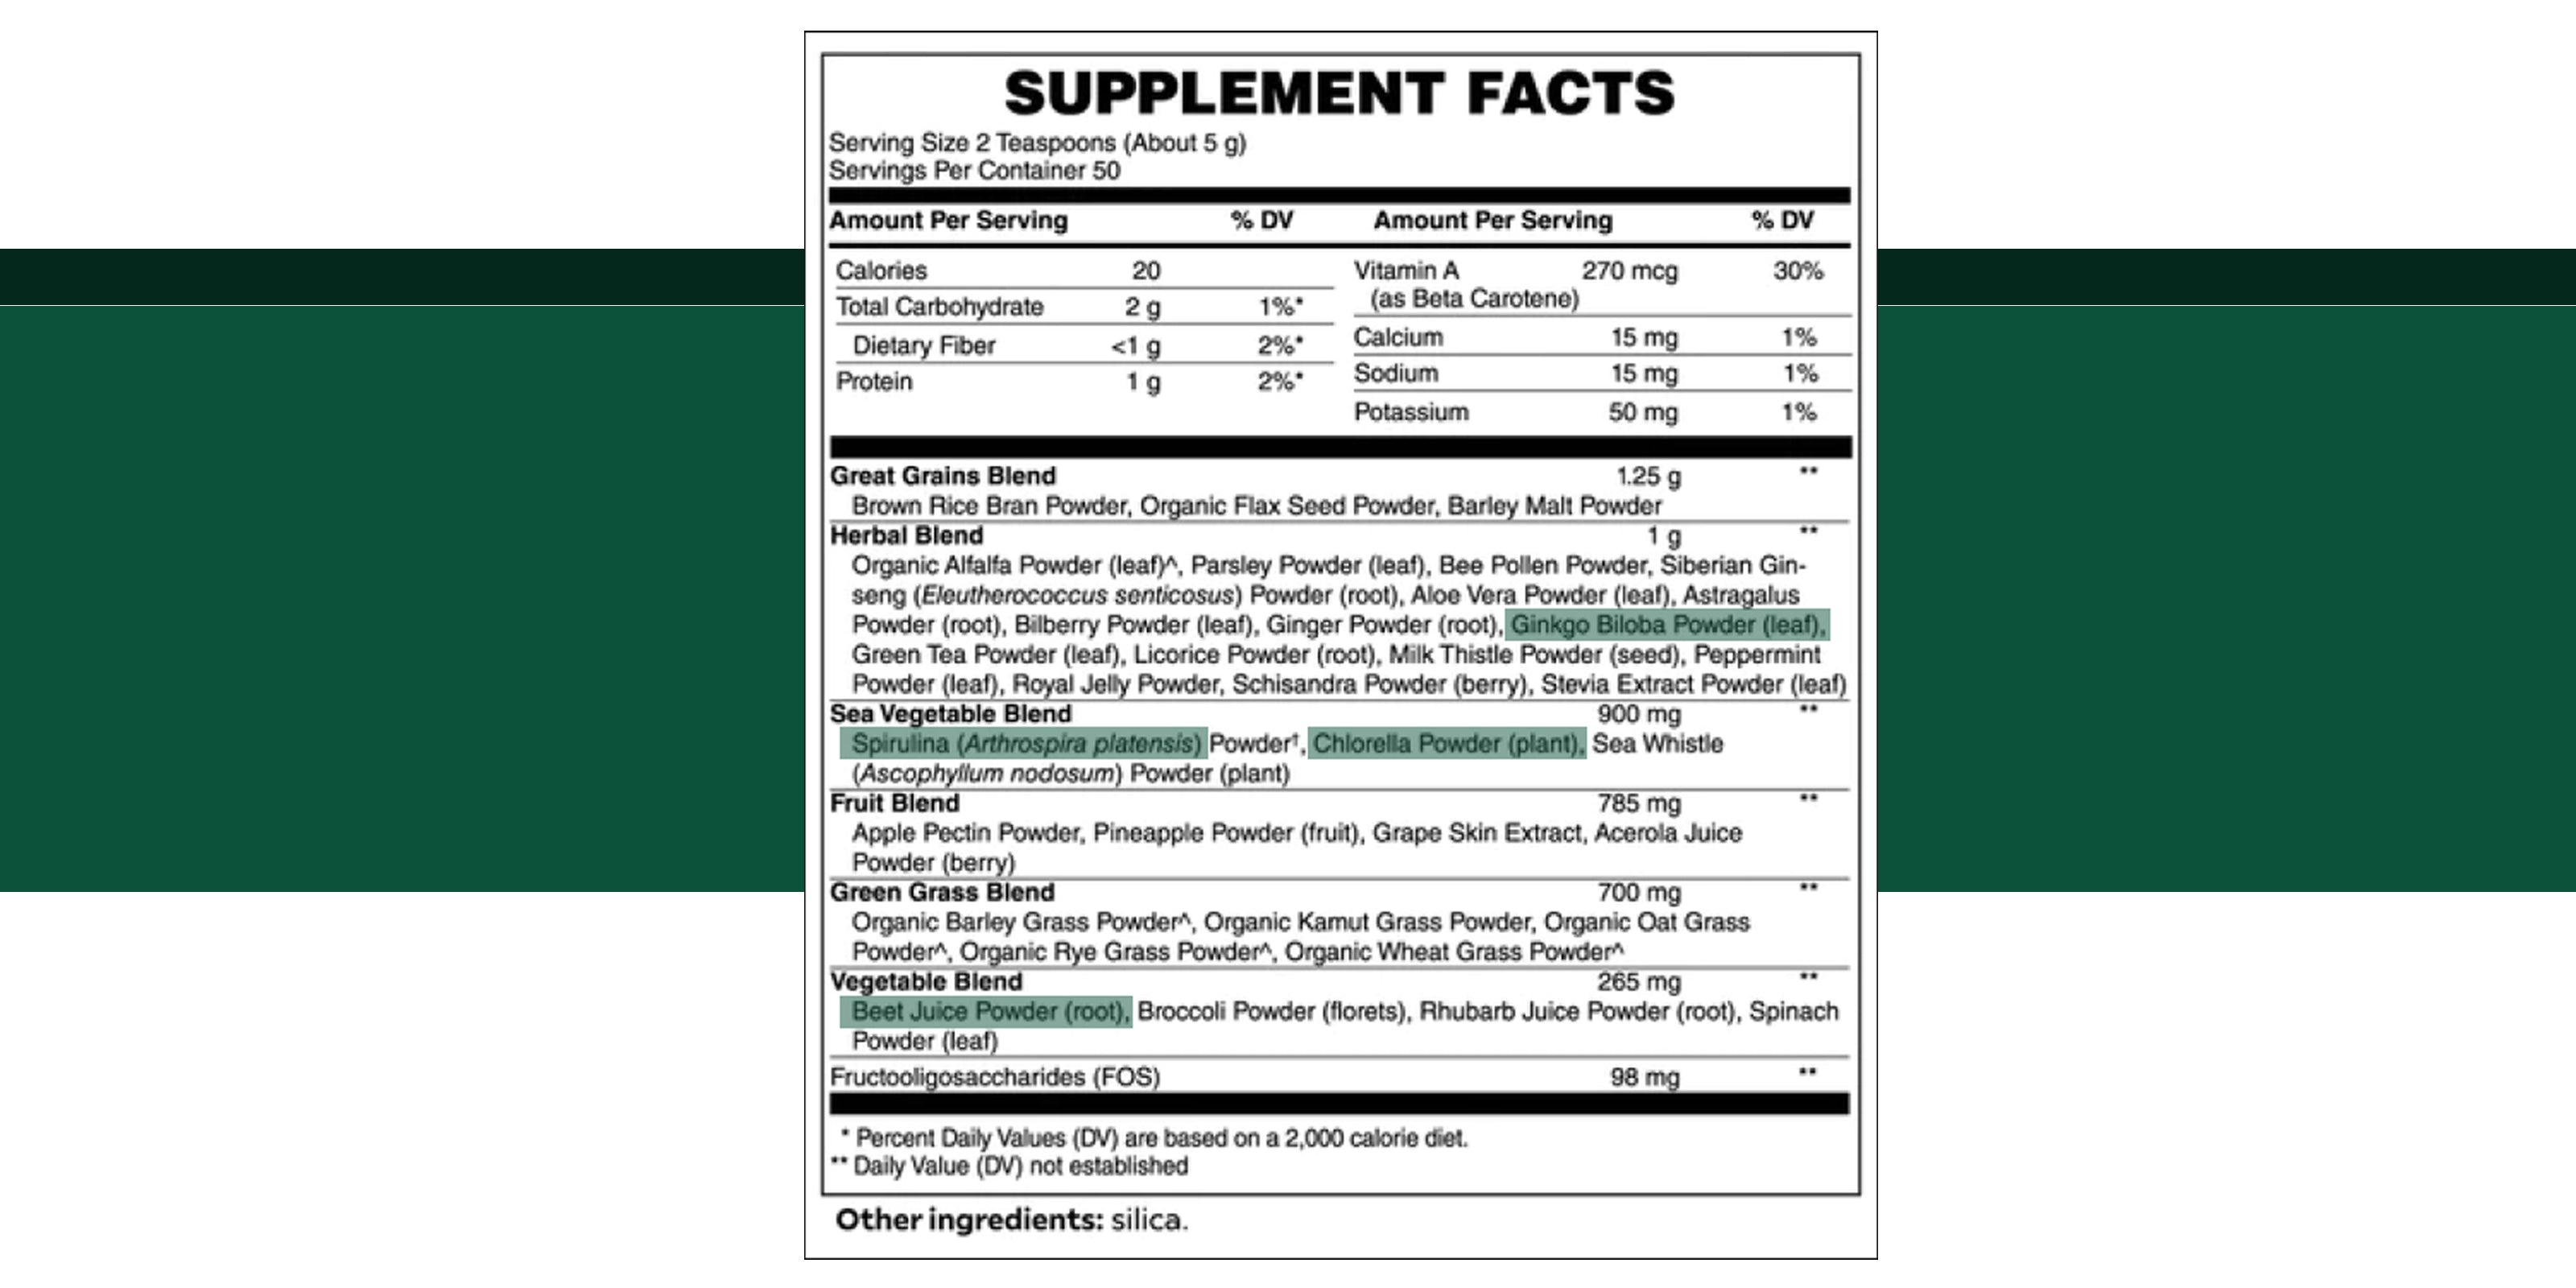 Supplement Facts - superfoods green powder benefits